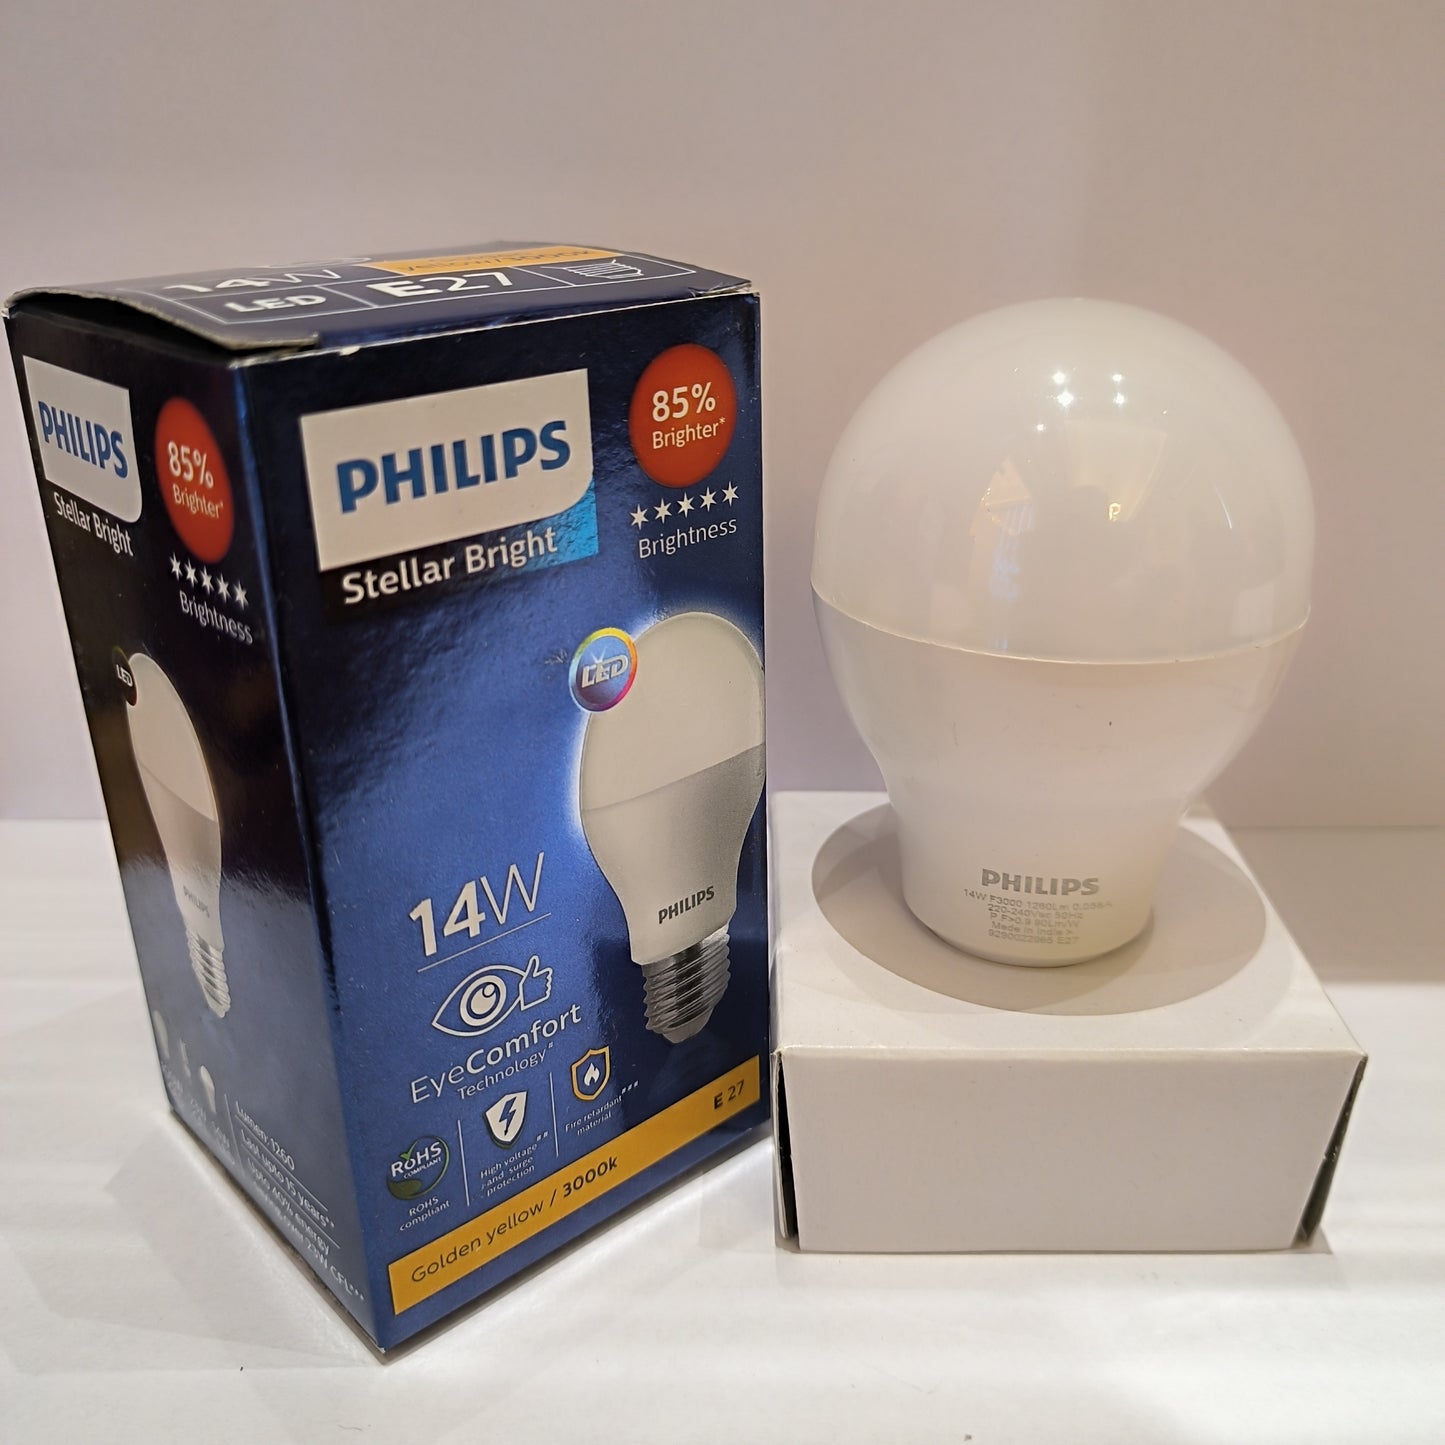 Philips E-27 Stellar Bright 14w LED Bulb Round Shape, Golden Yellow - Best Price for Illuminating Brilliance